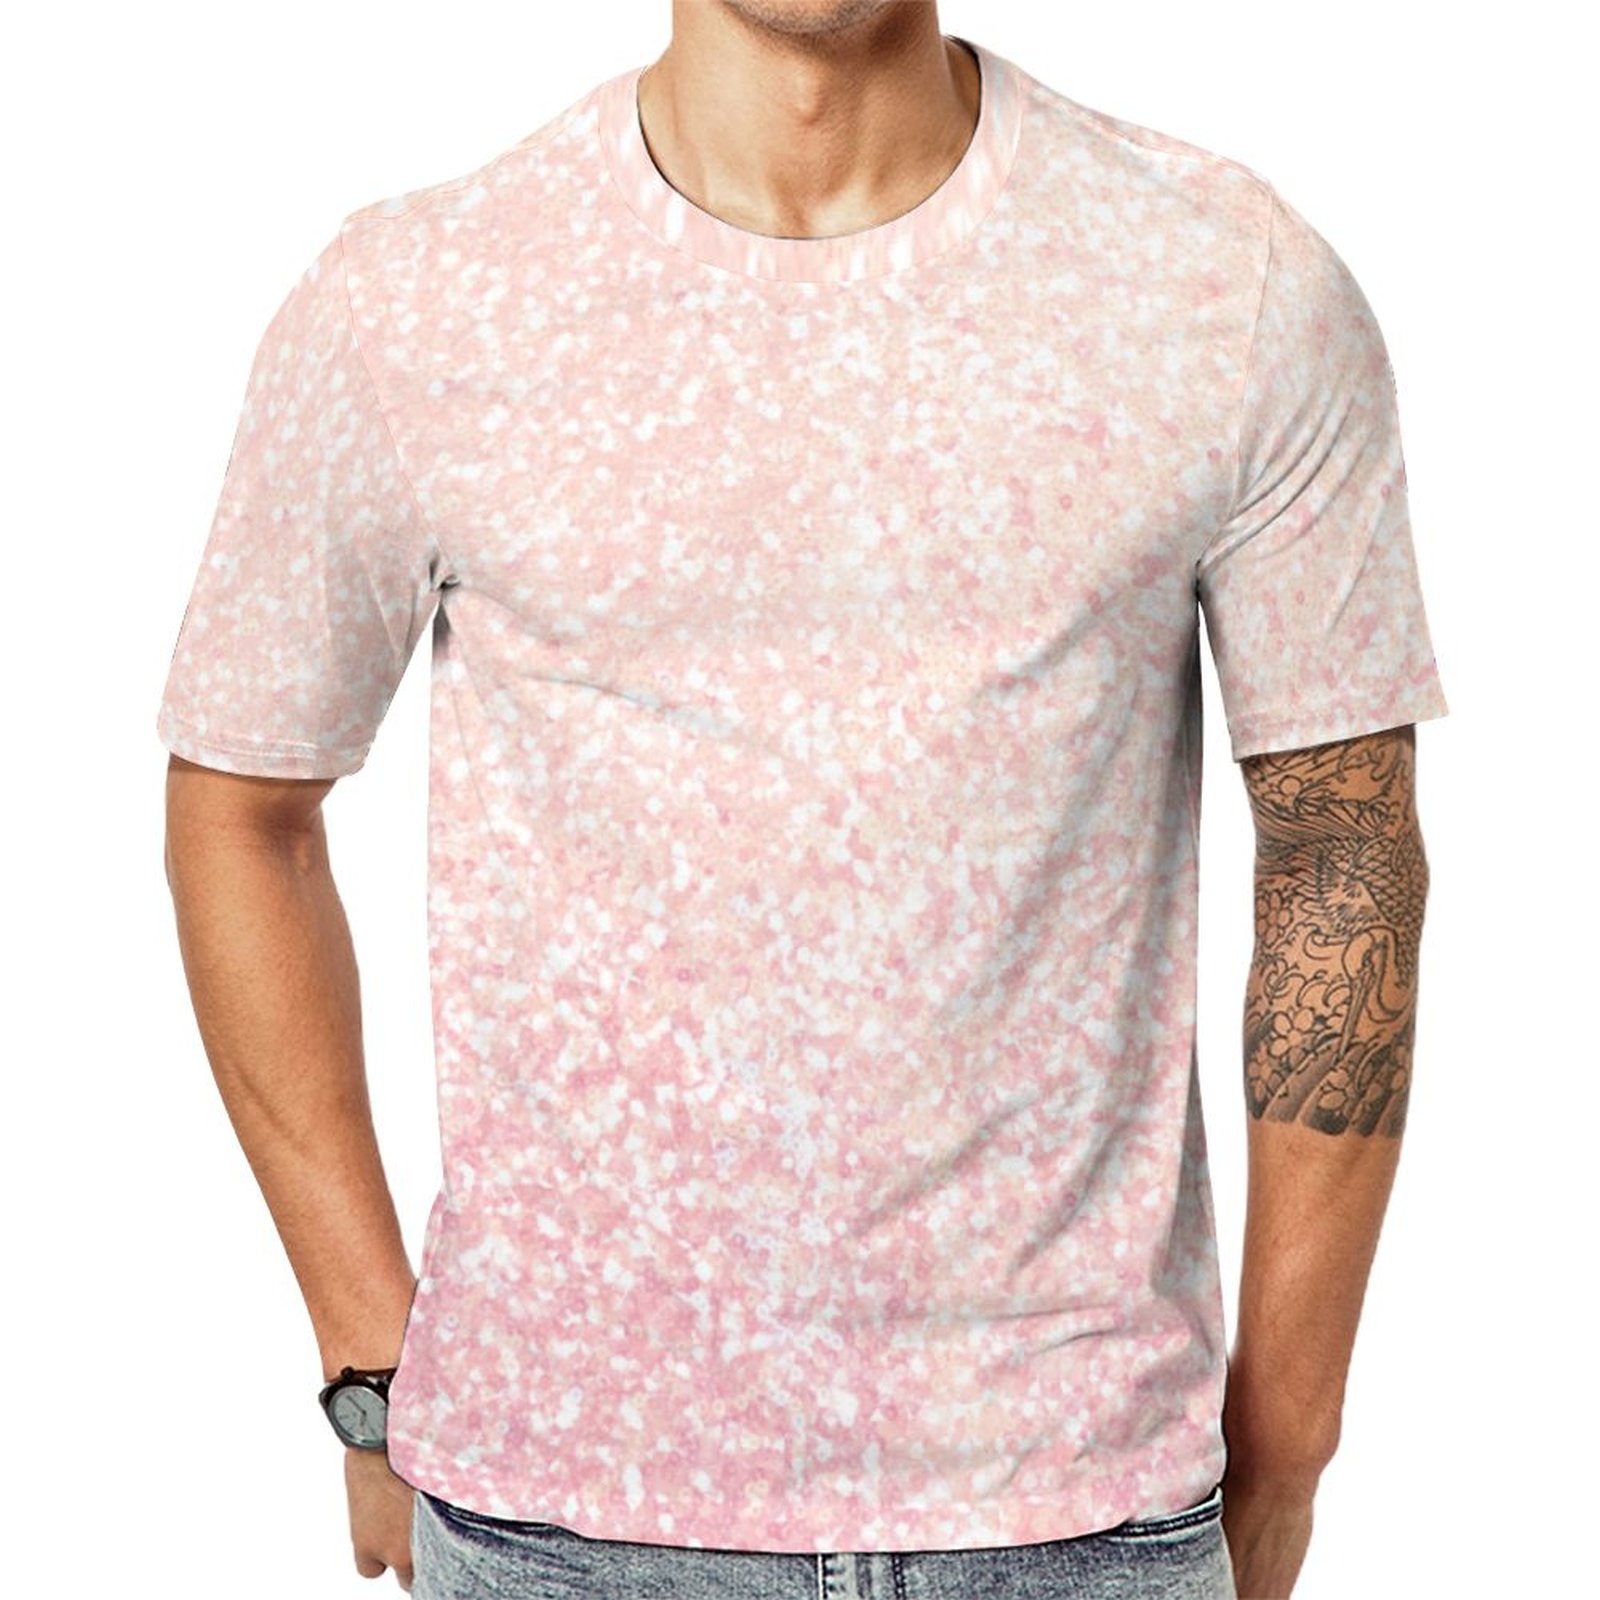 Glitter Stylish Powder Pink Sequin Blush Pink Short Sleeve Print Unisex Tshirt Summer Casual Tees for Men and Women Coolcoshirts